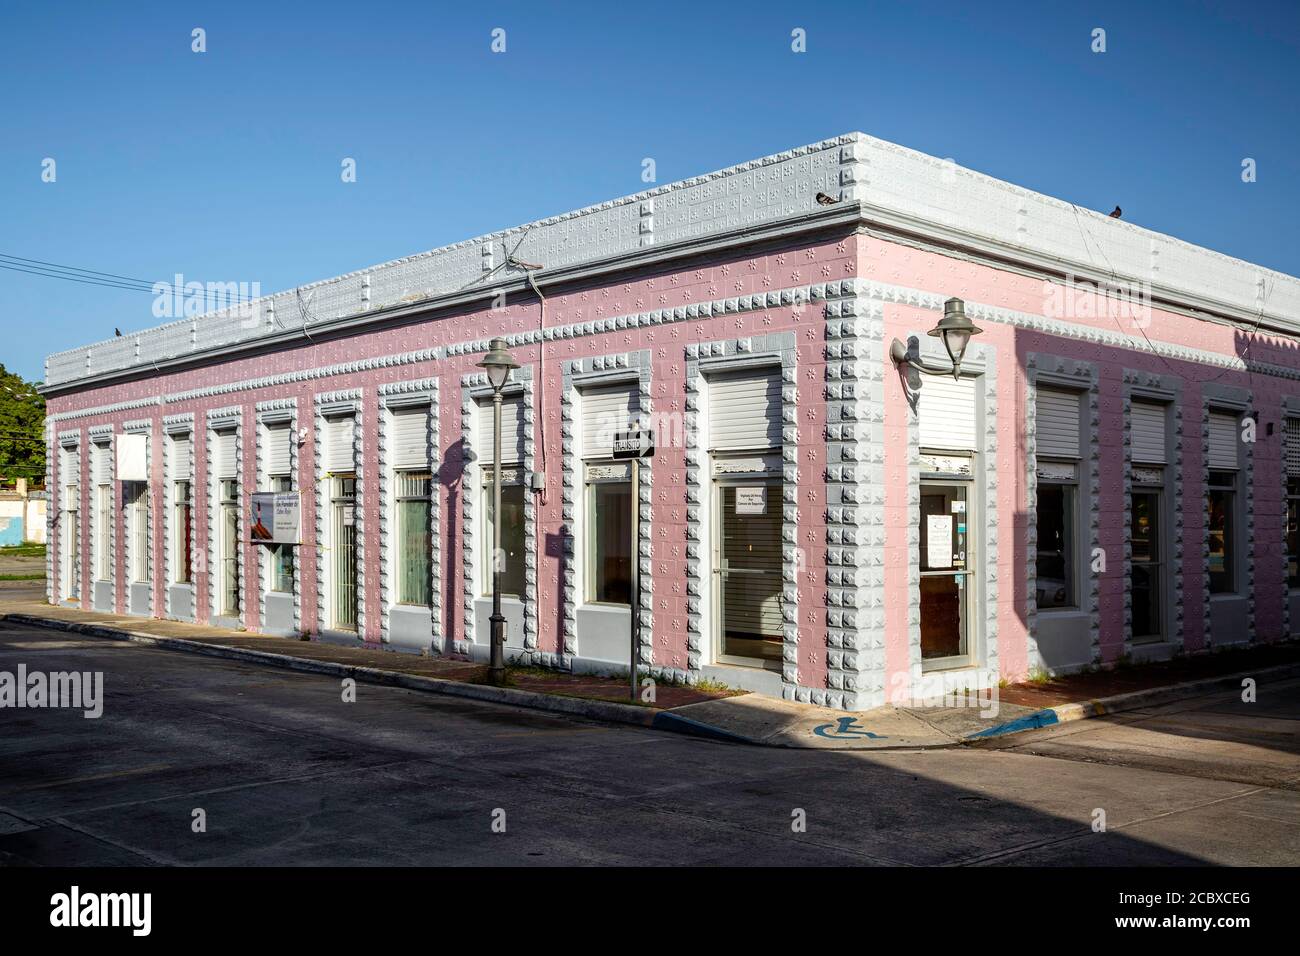 Bâtiment Ramirez Marini (alias Casa Rosa, Maison Rose), Cabo Rojo, Porto Rico Banque D'Images